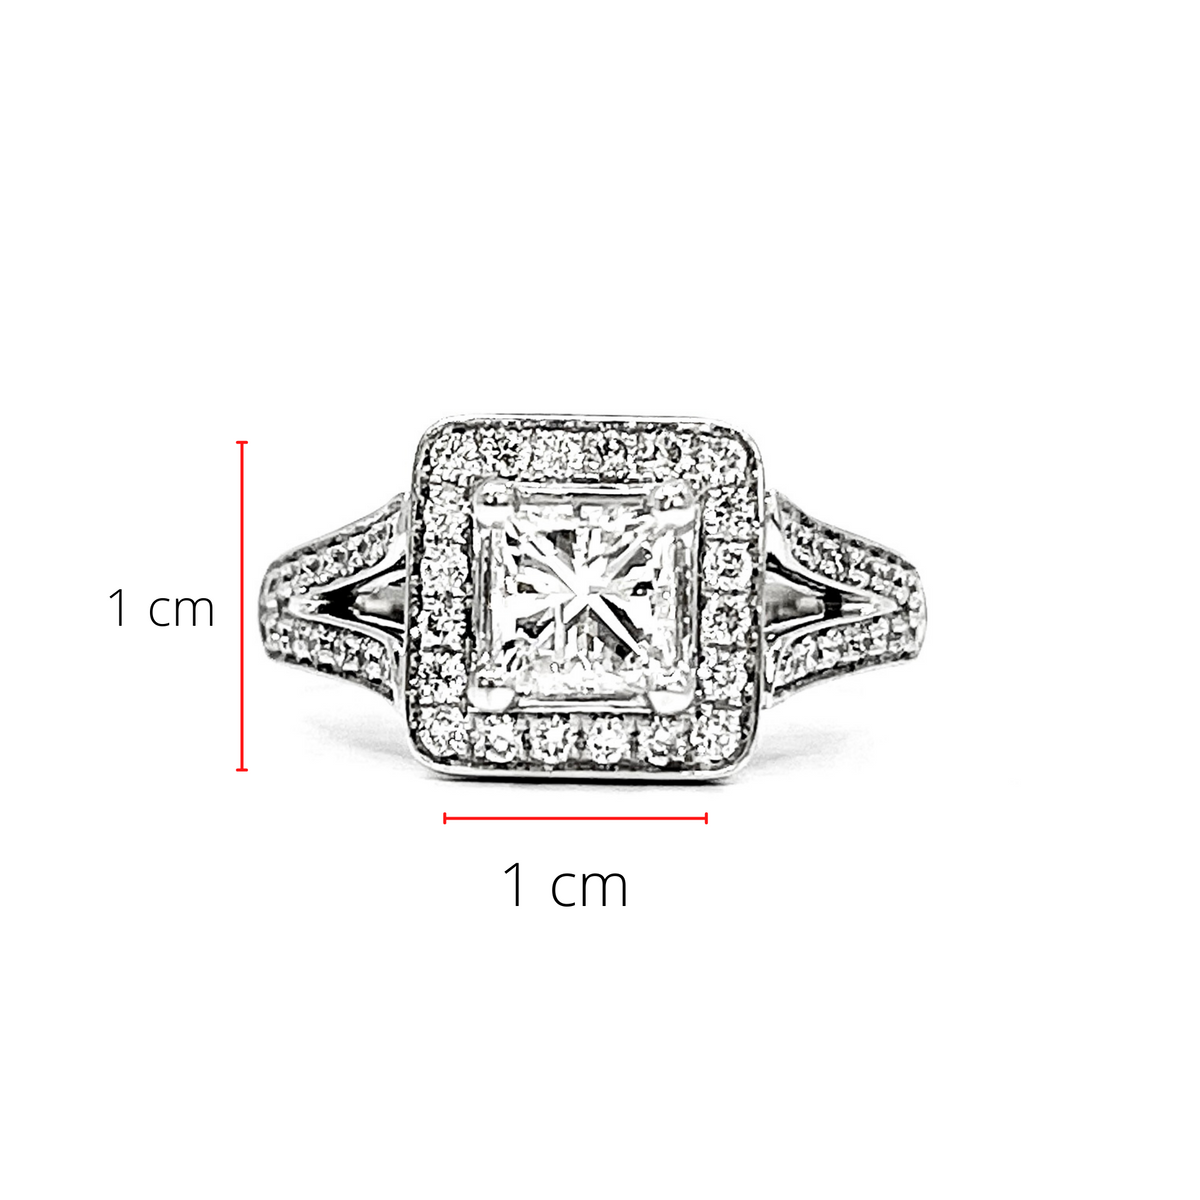 14K White Gold 1.27cttw Princess Cut Diamond Halo Engagement Ring, size 6